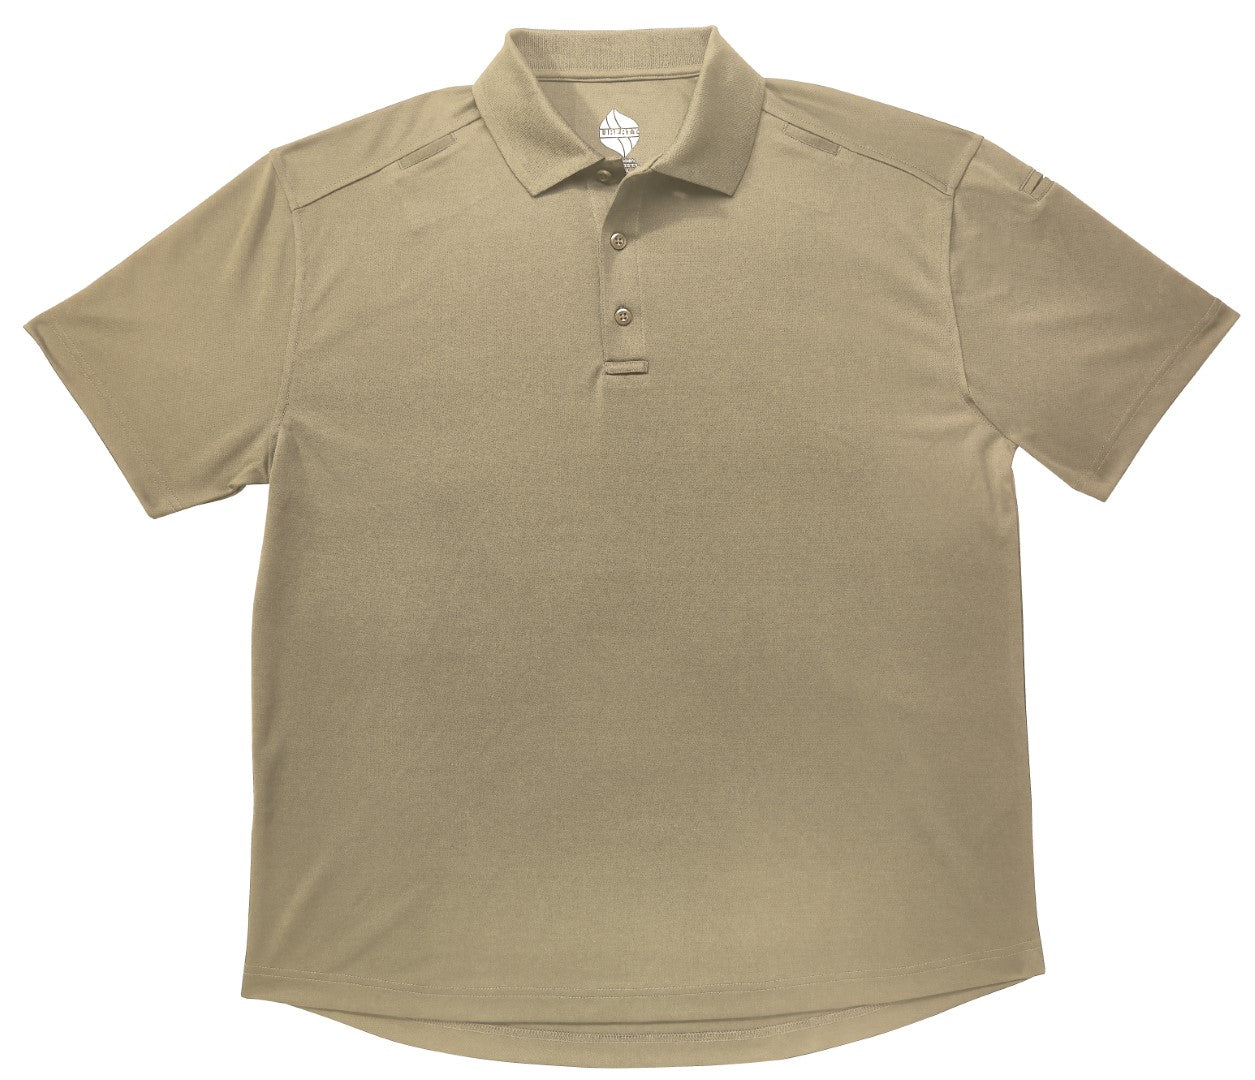 Tactical Knit Polo Shirt 3 Button Placket gray color